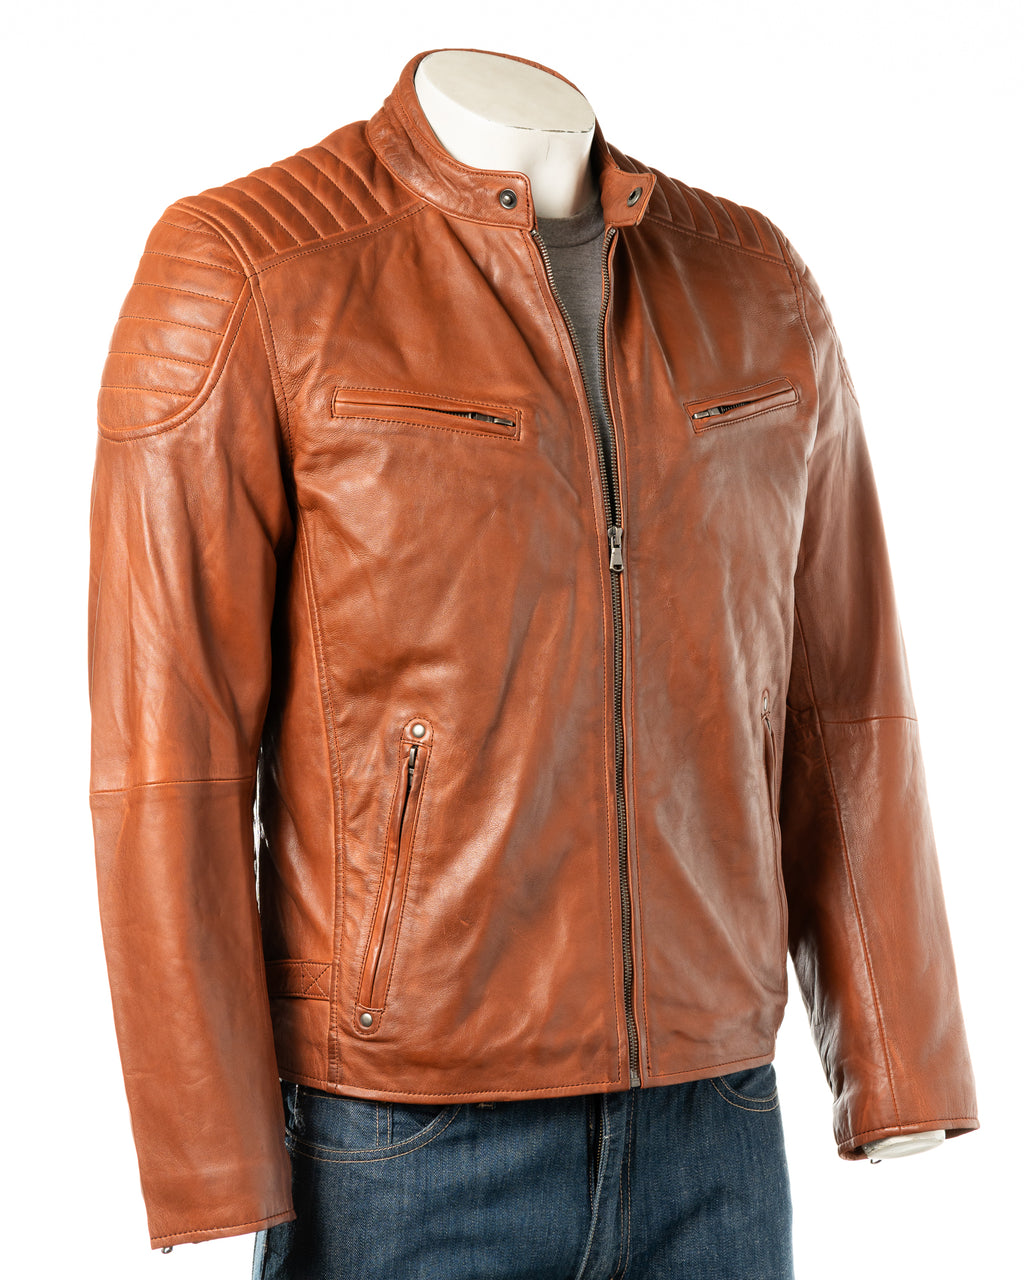 Men's Timber Racer Style Leather Jacket: Ennio